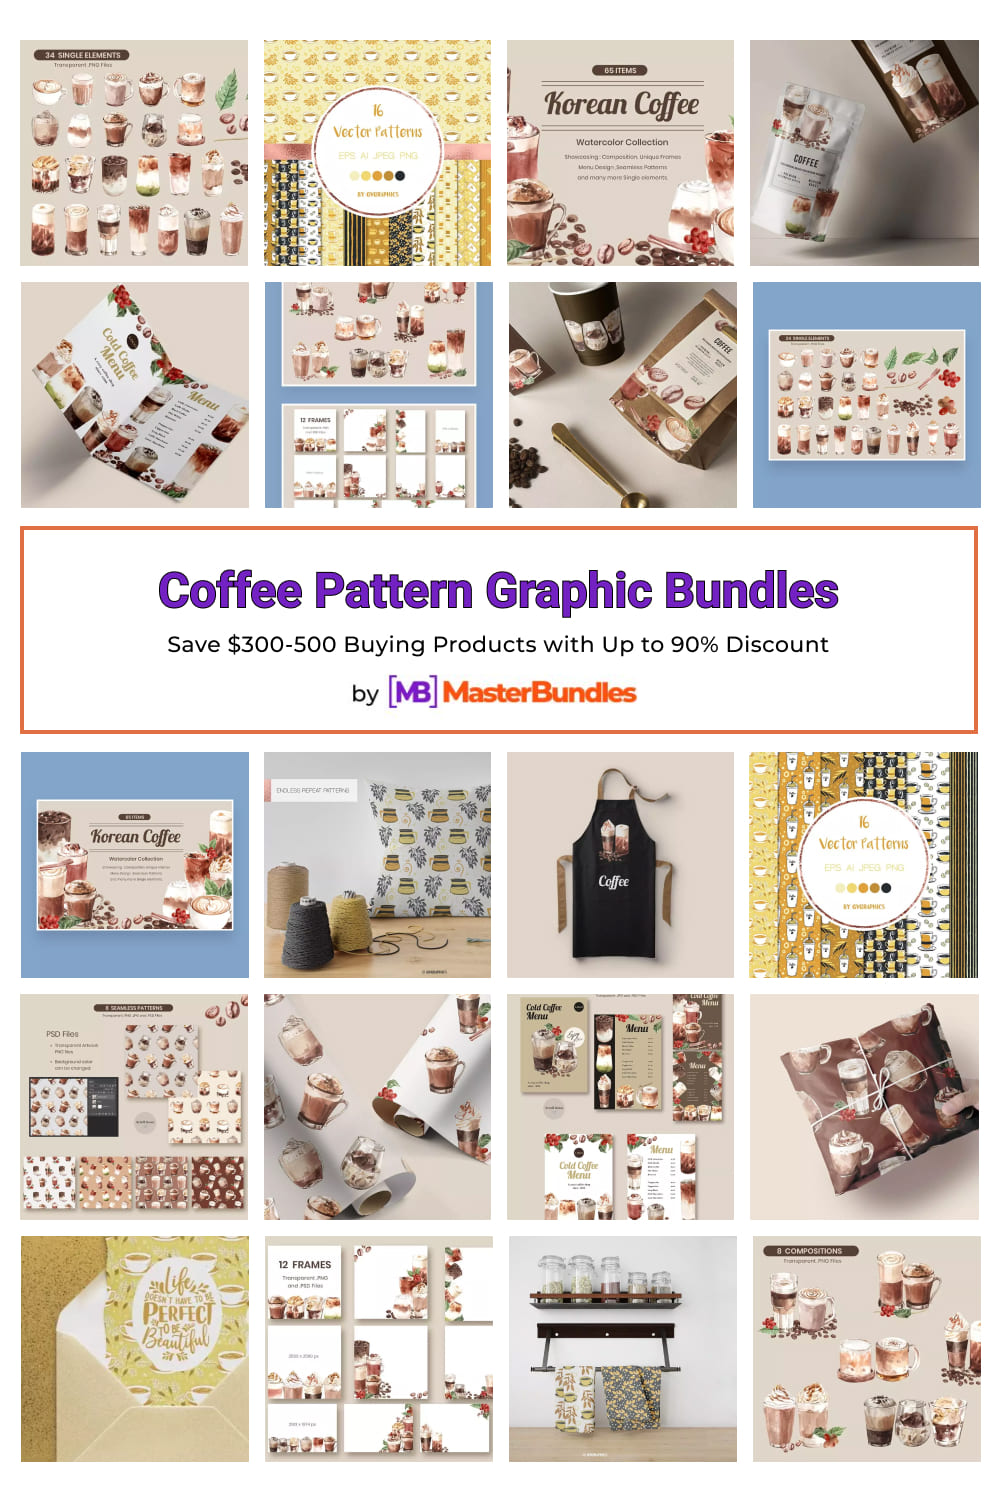 Coffee Pattern Graphic Bundles Pinterest image.